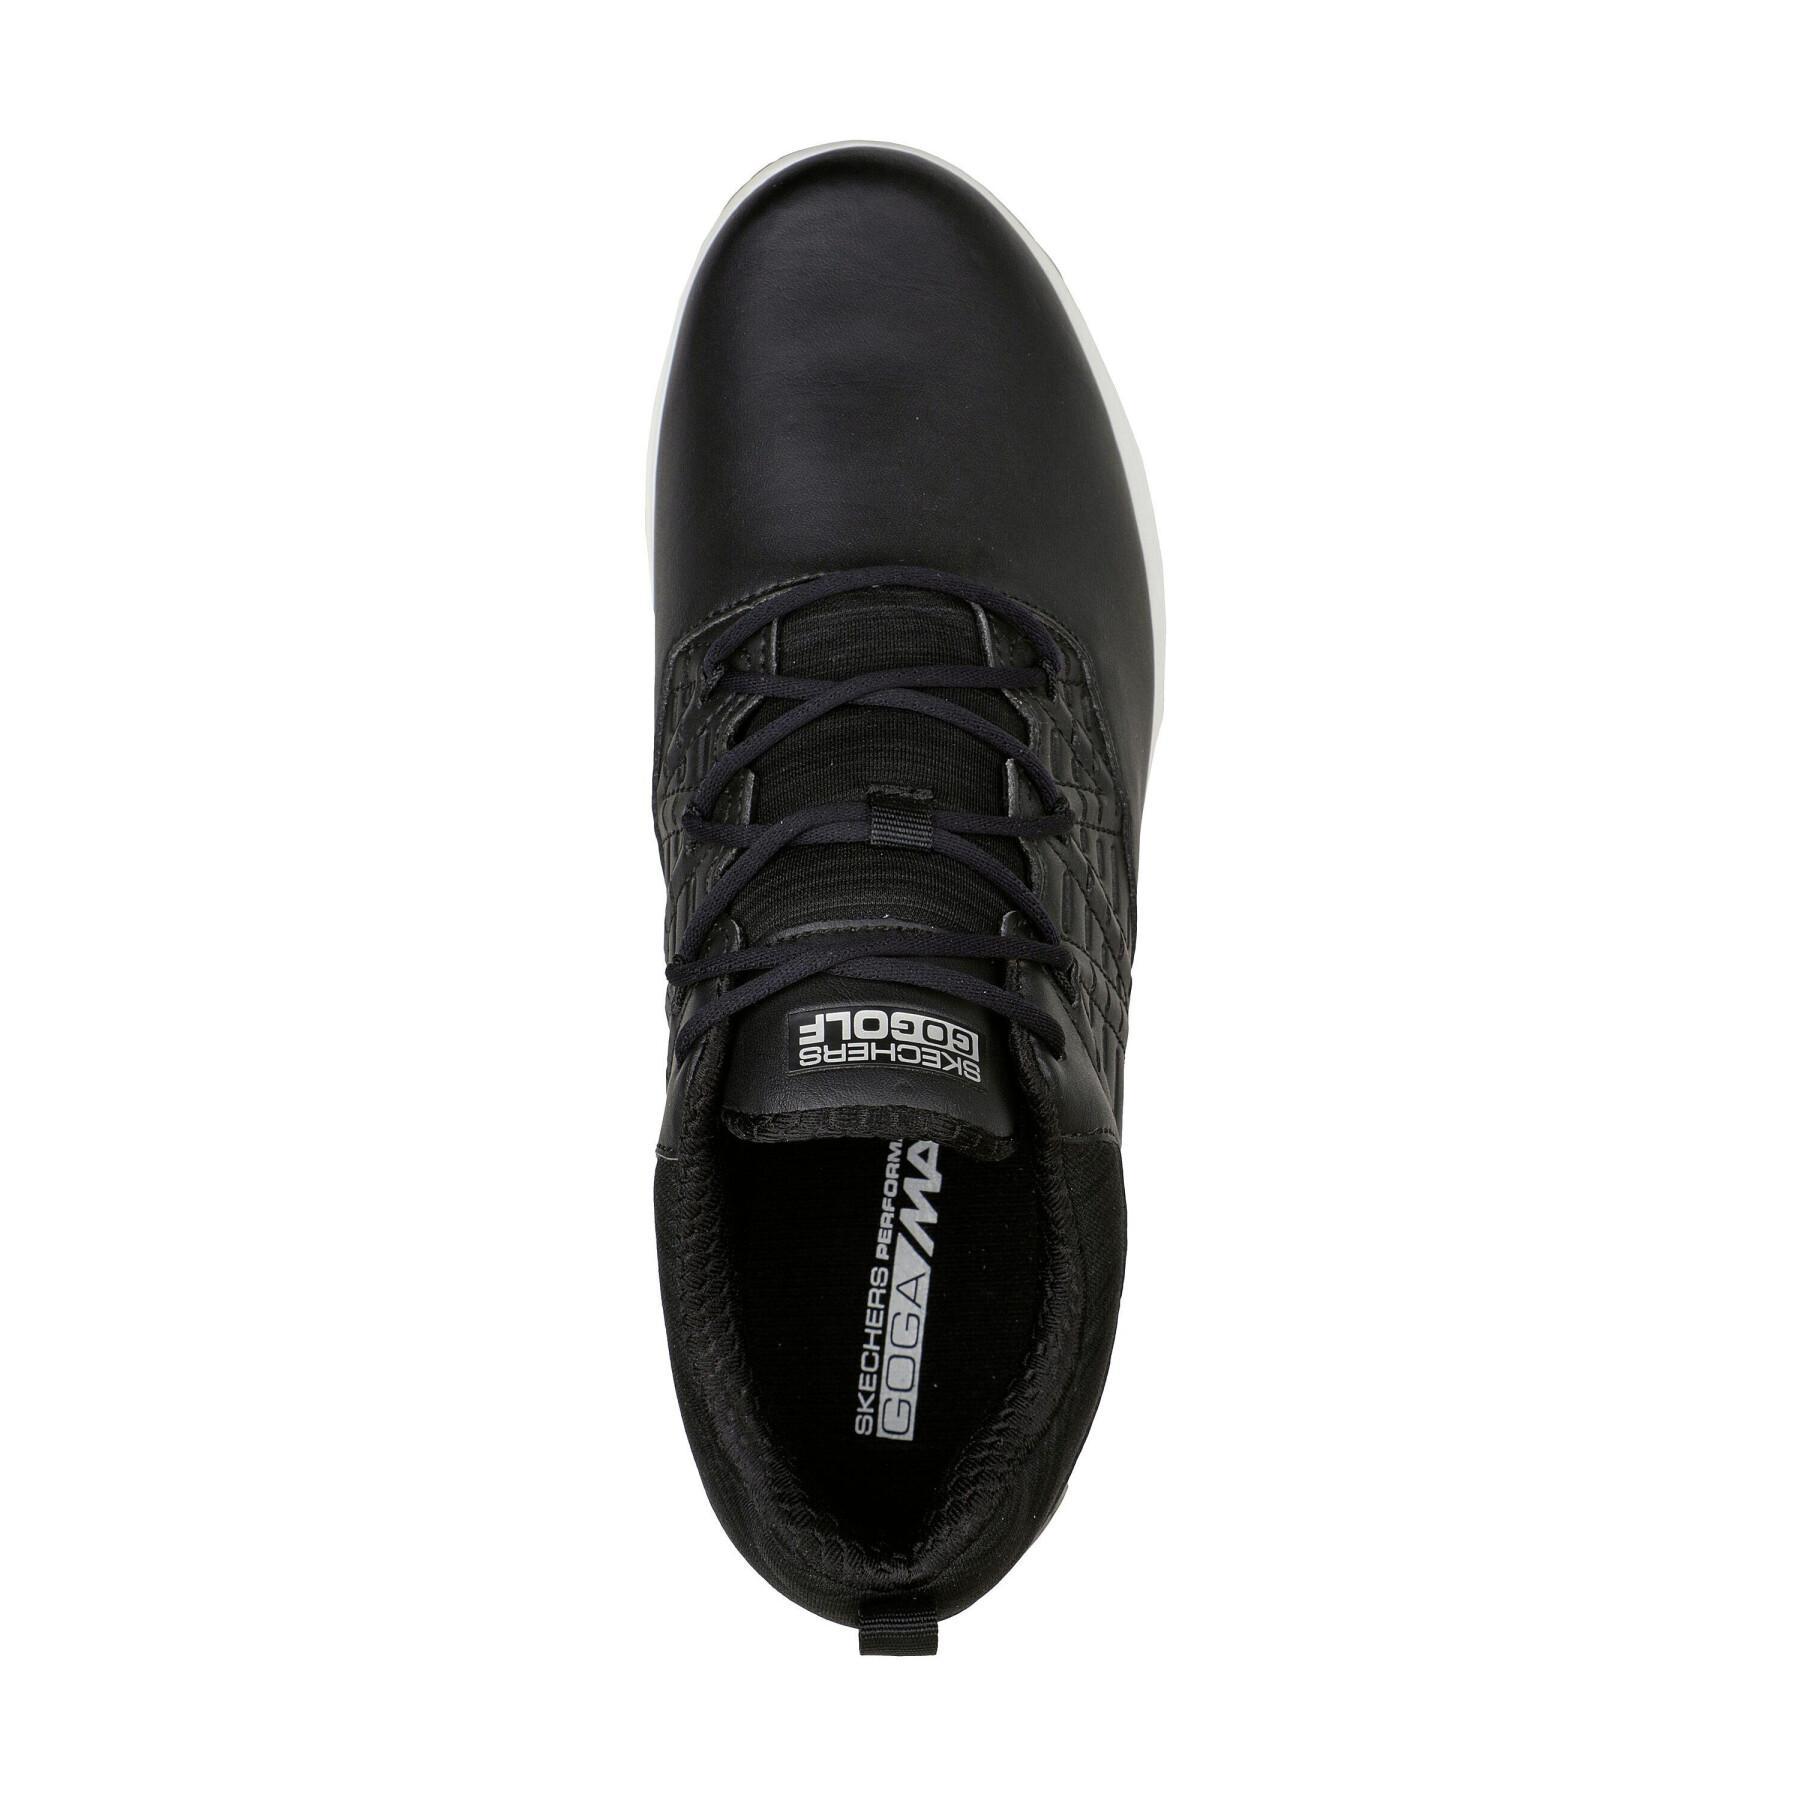 Damskie buty do golfa z kolcami Skechers GO GOLF Pro 2